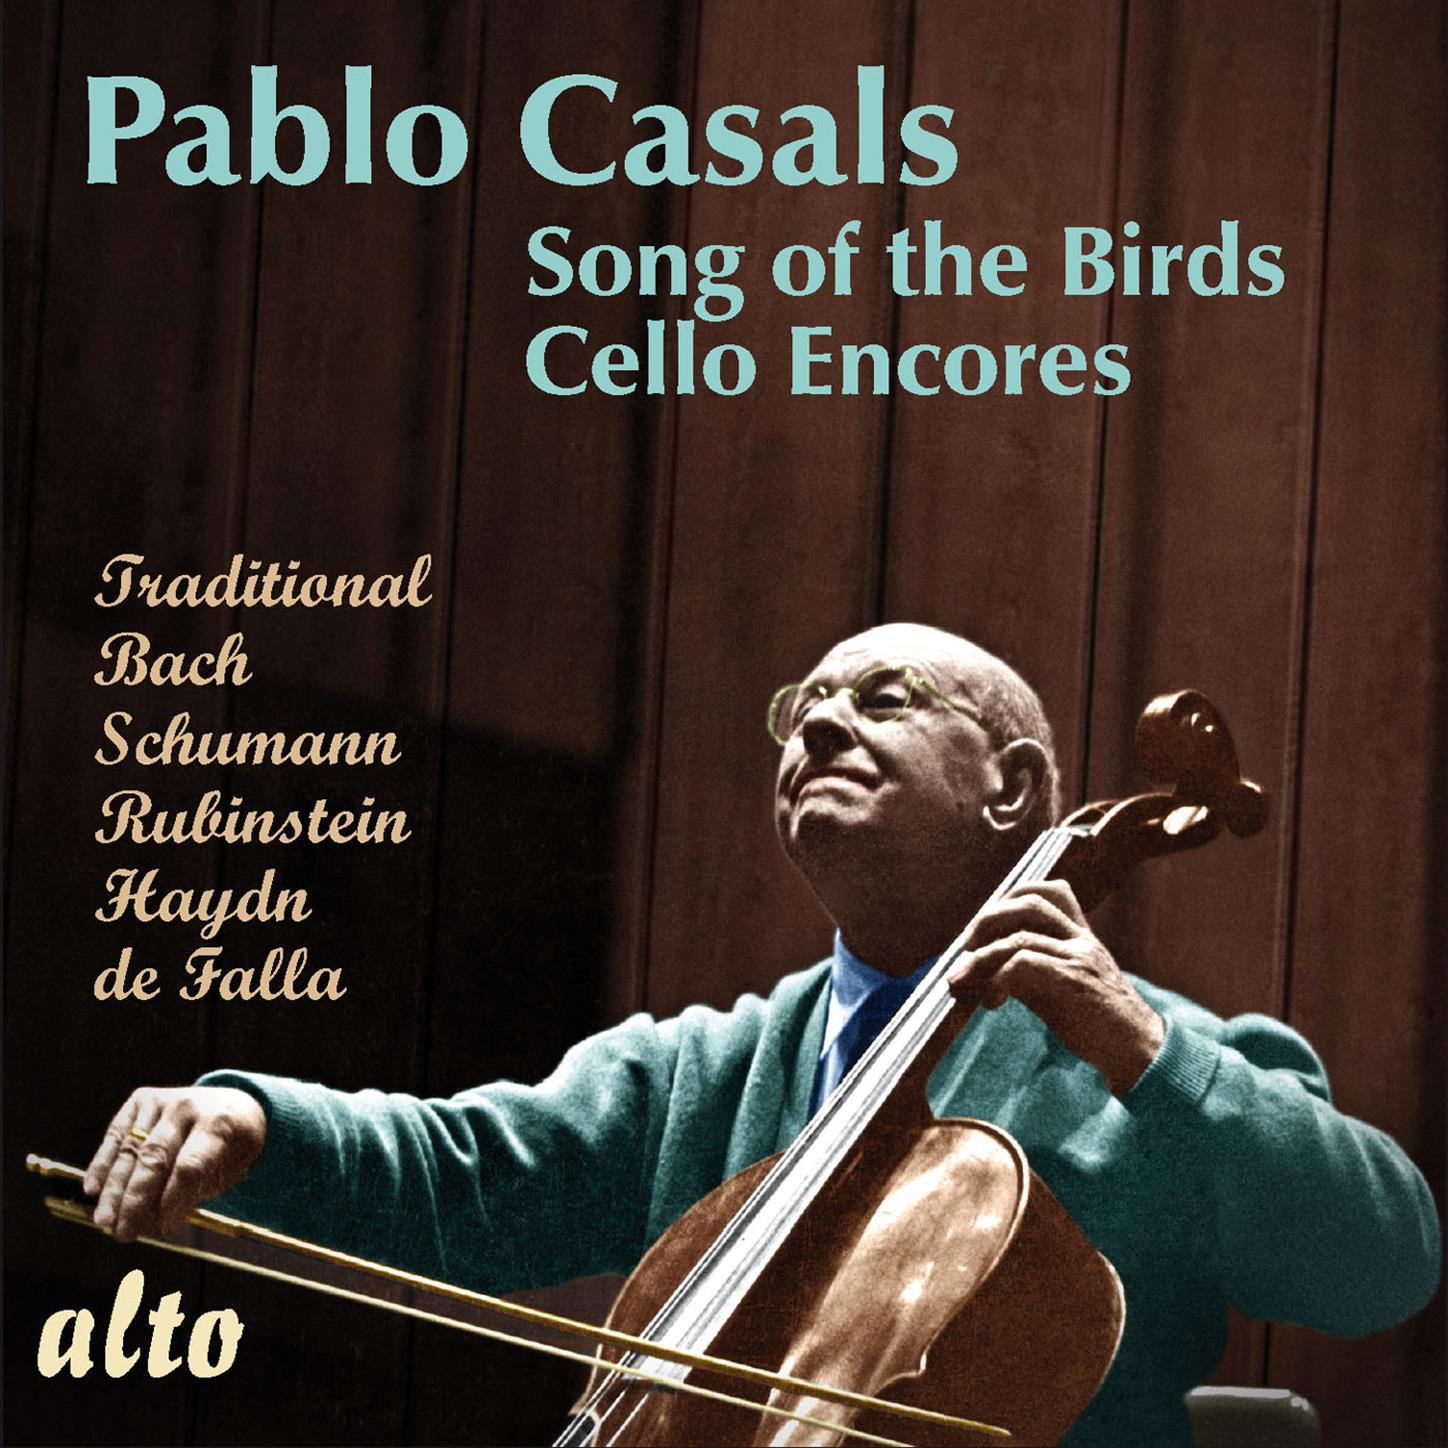 Pablo Casals: 'Song of the Birds' and Cello Encores